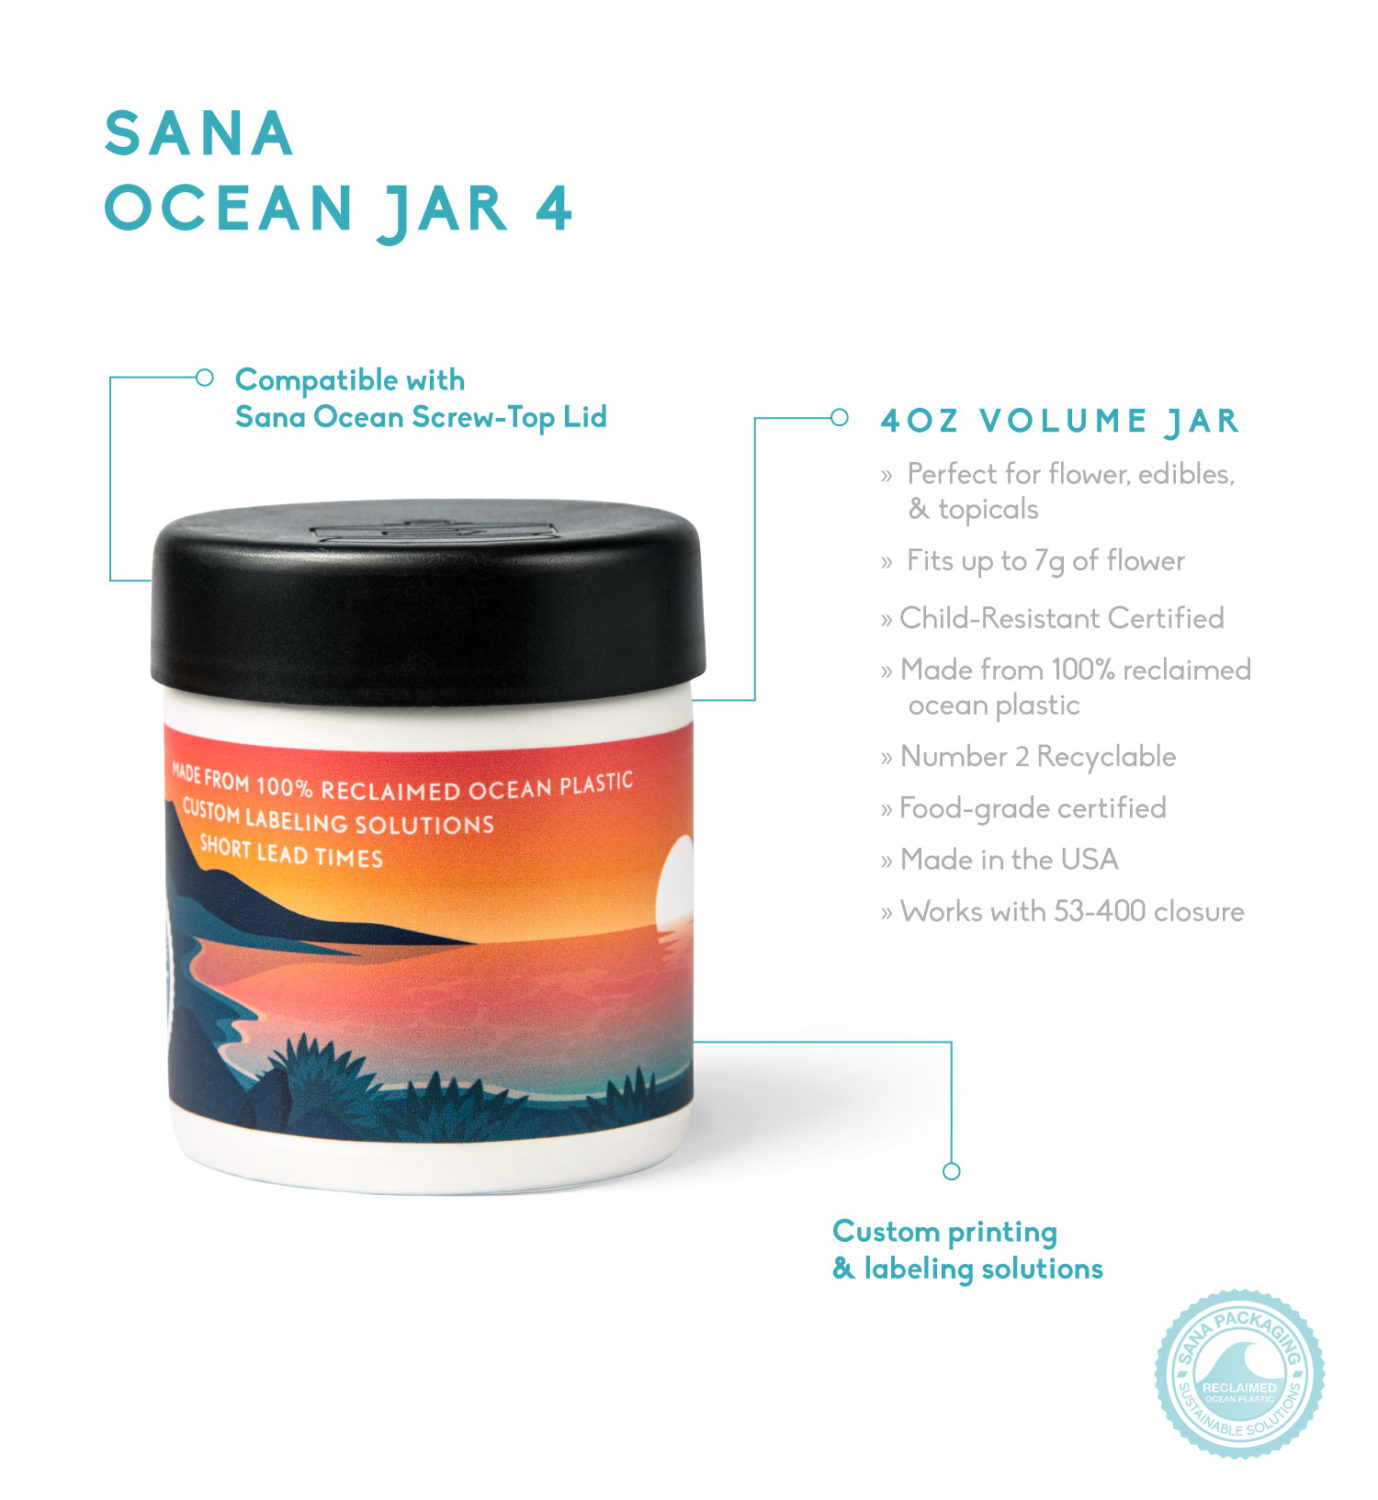 Sana Ocean Jar 4 infographic 1